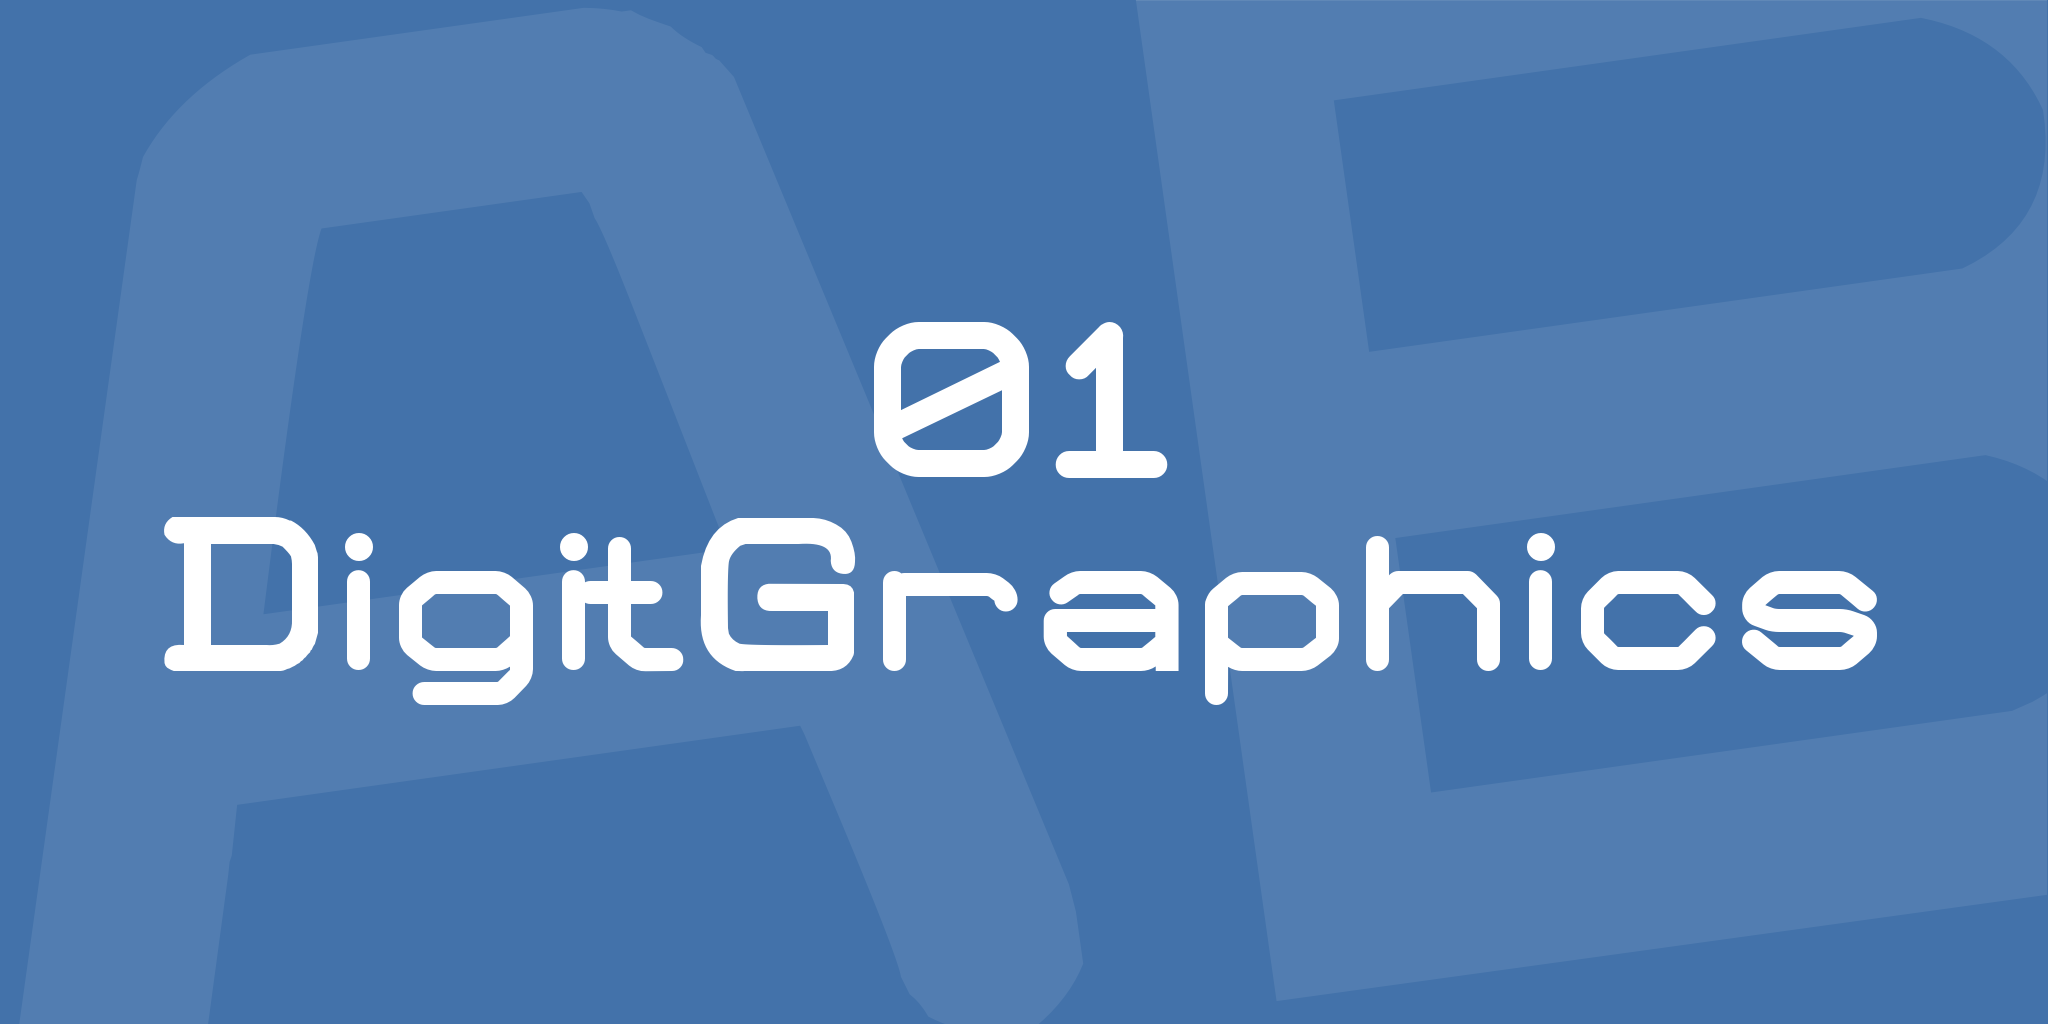 01 Digit Graphics